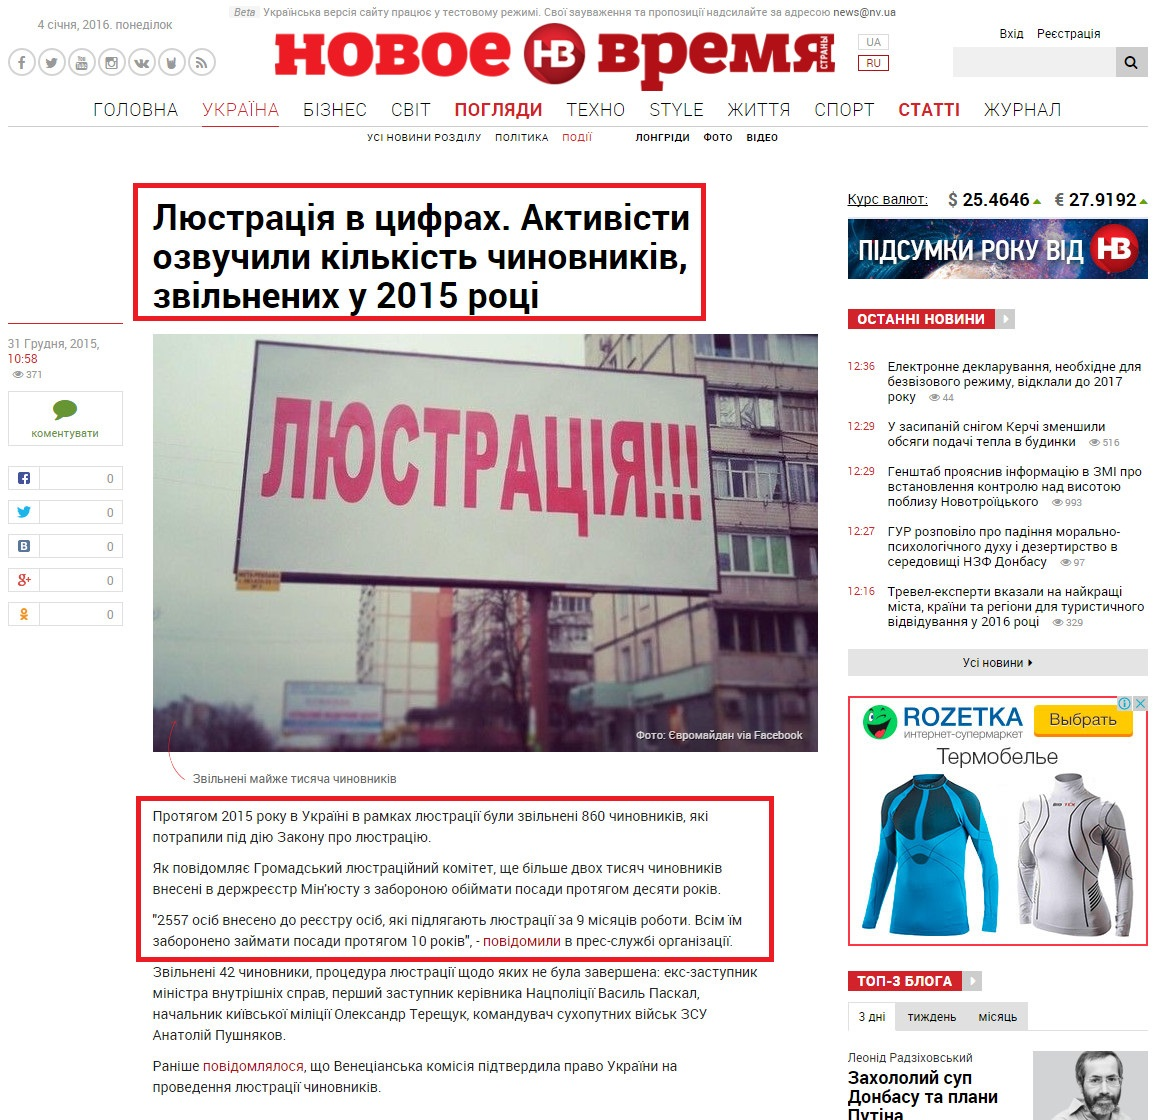 http://www.slovoidilo.ua/2015/09/30/stattja/polityka/chysta-vlada-pidsumky-lyustraczijnoho-roku 